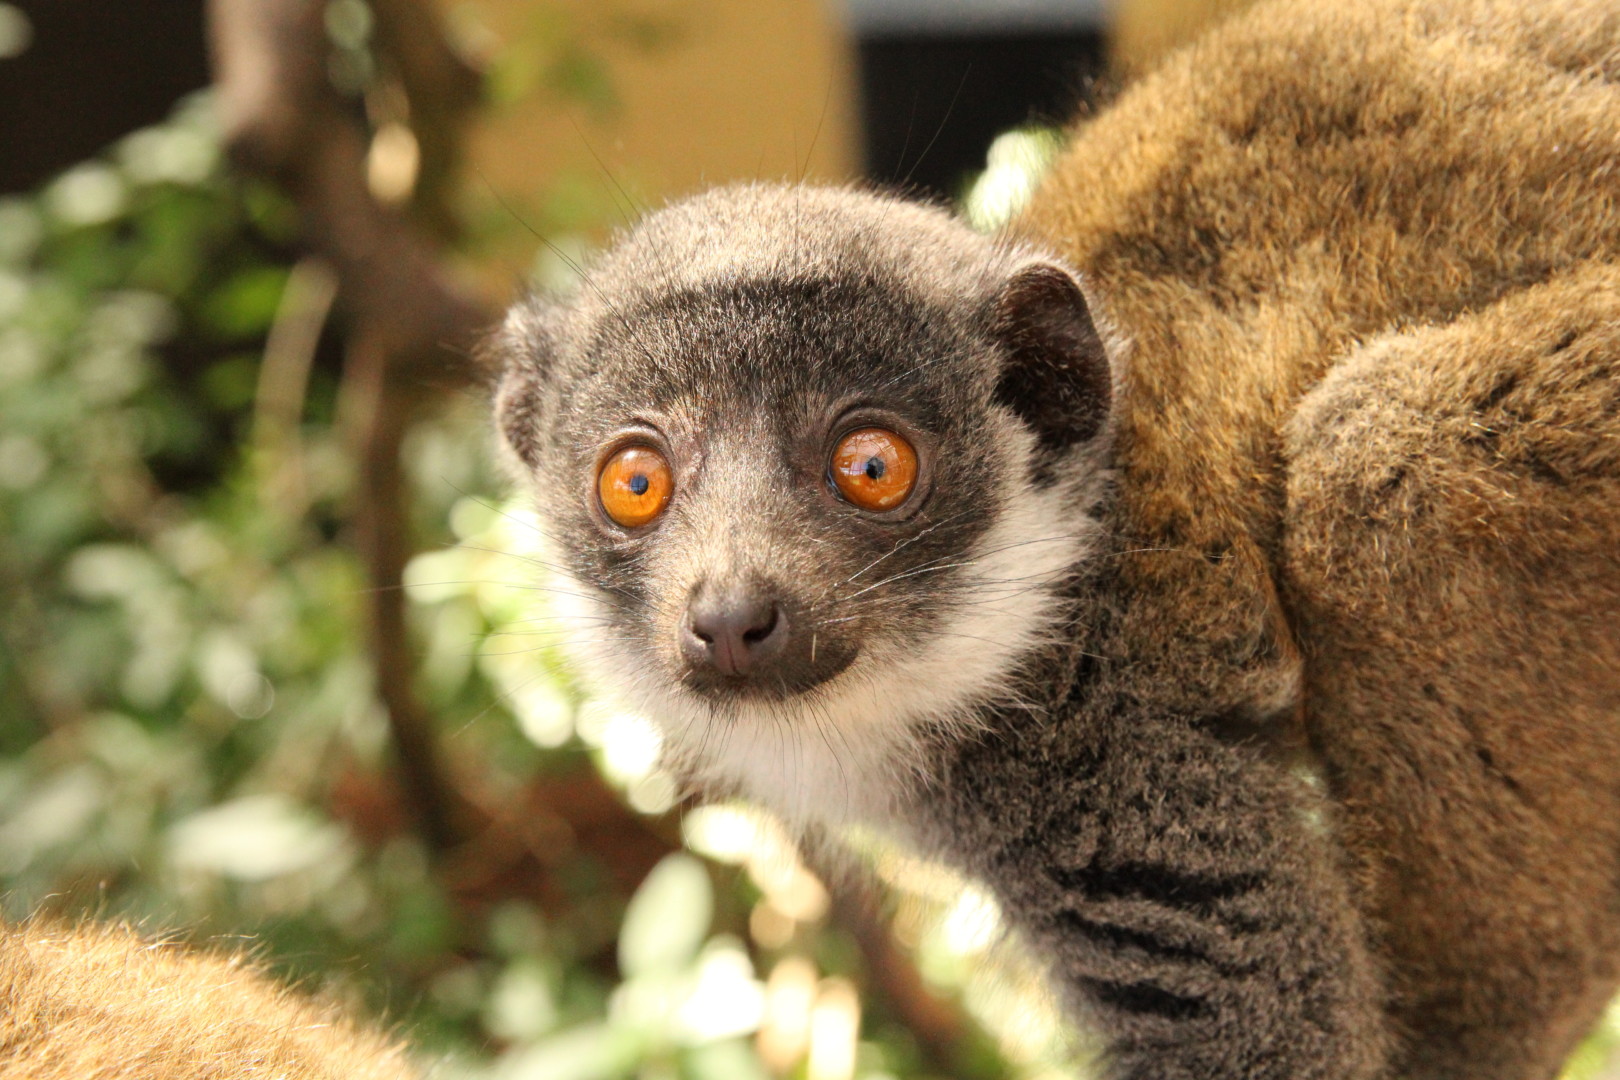 Mongoose lemur juvenile Xiomara looks at camera